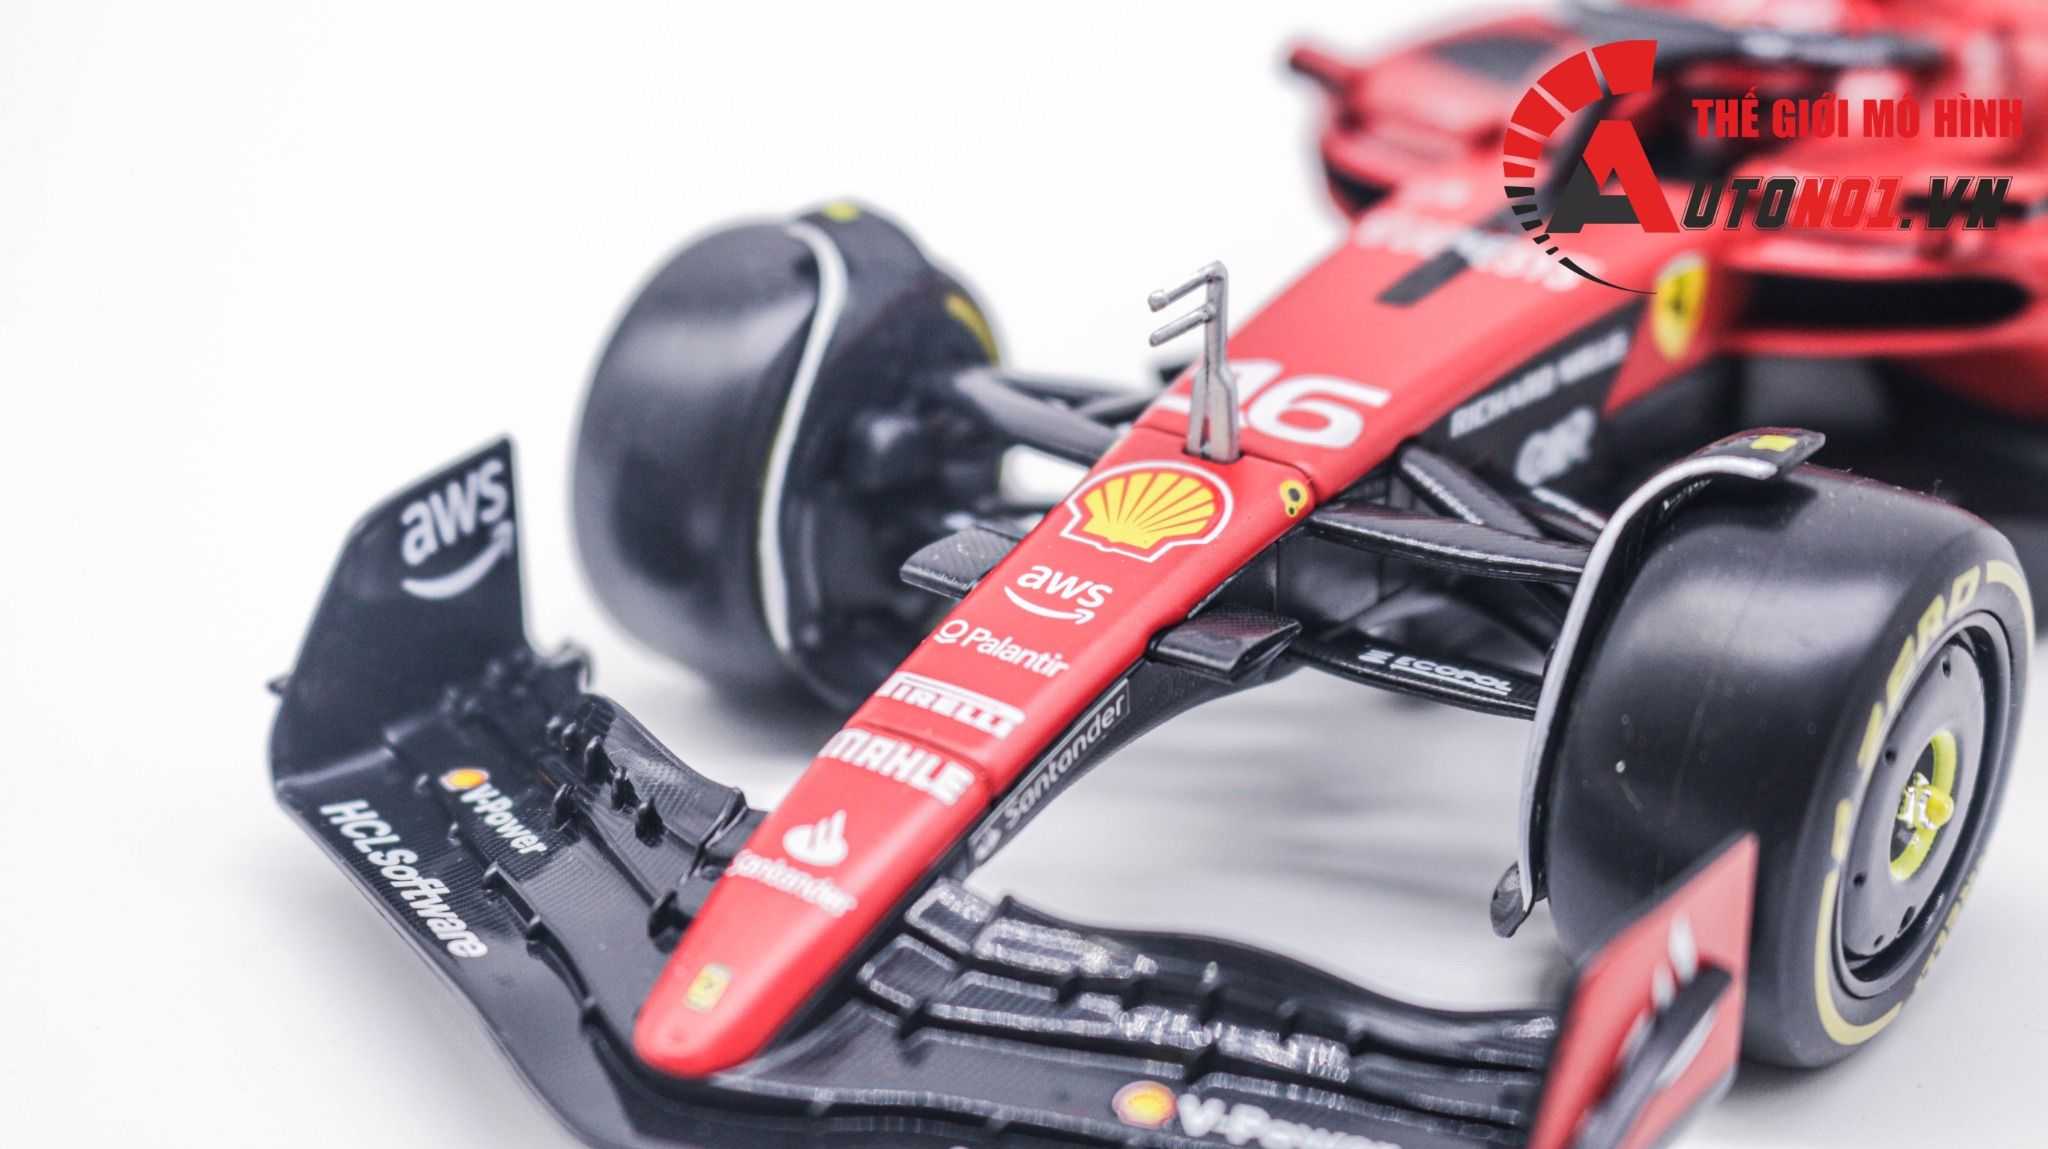  Mô hình xe đua F1 Ferrari Formular Sf23 2023 có hộp mica tỉ lệ 1:24 Bburago OT333 